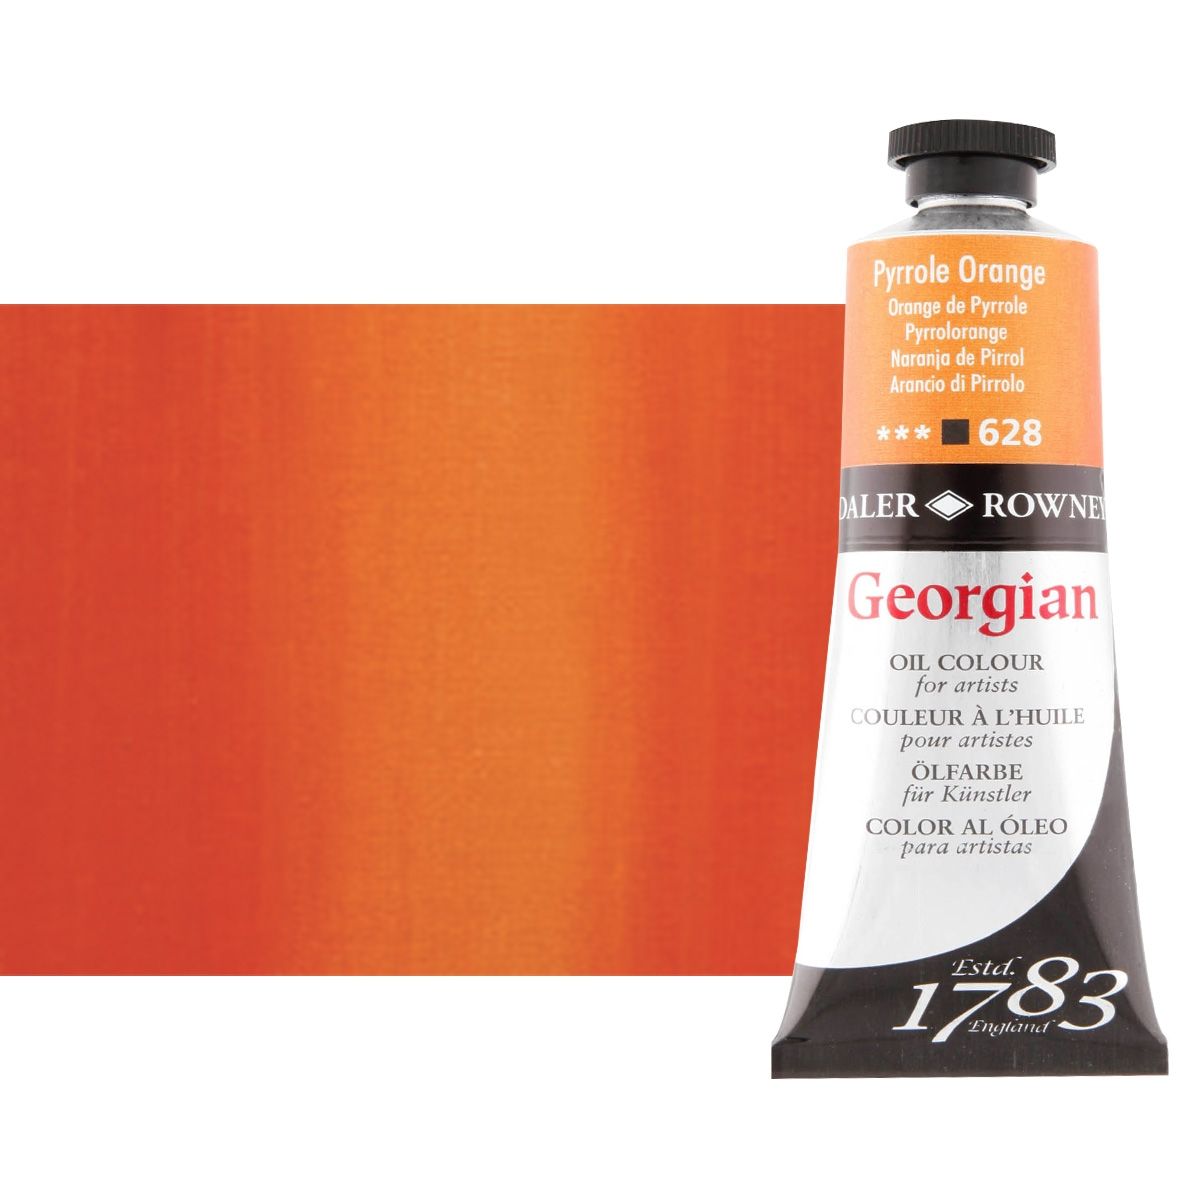 Daler-Rowney Georgian Oil Color 38ml Tube - Pyrrole Orange